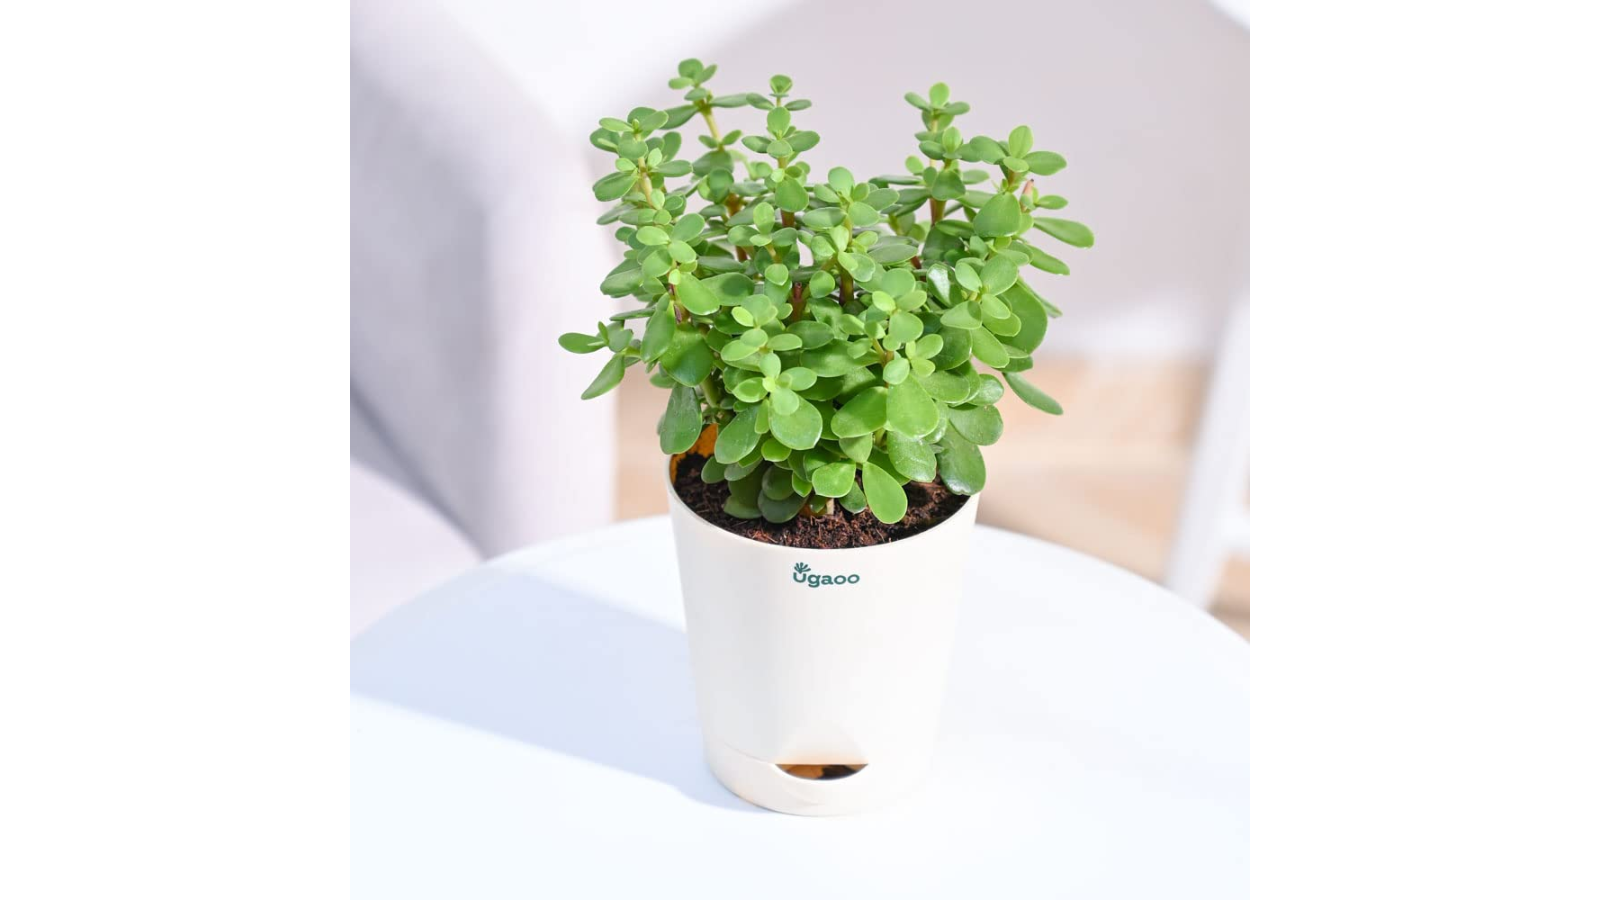 Ugaoo Good Luck Jade Plant with Self-Watering Pot